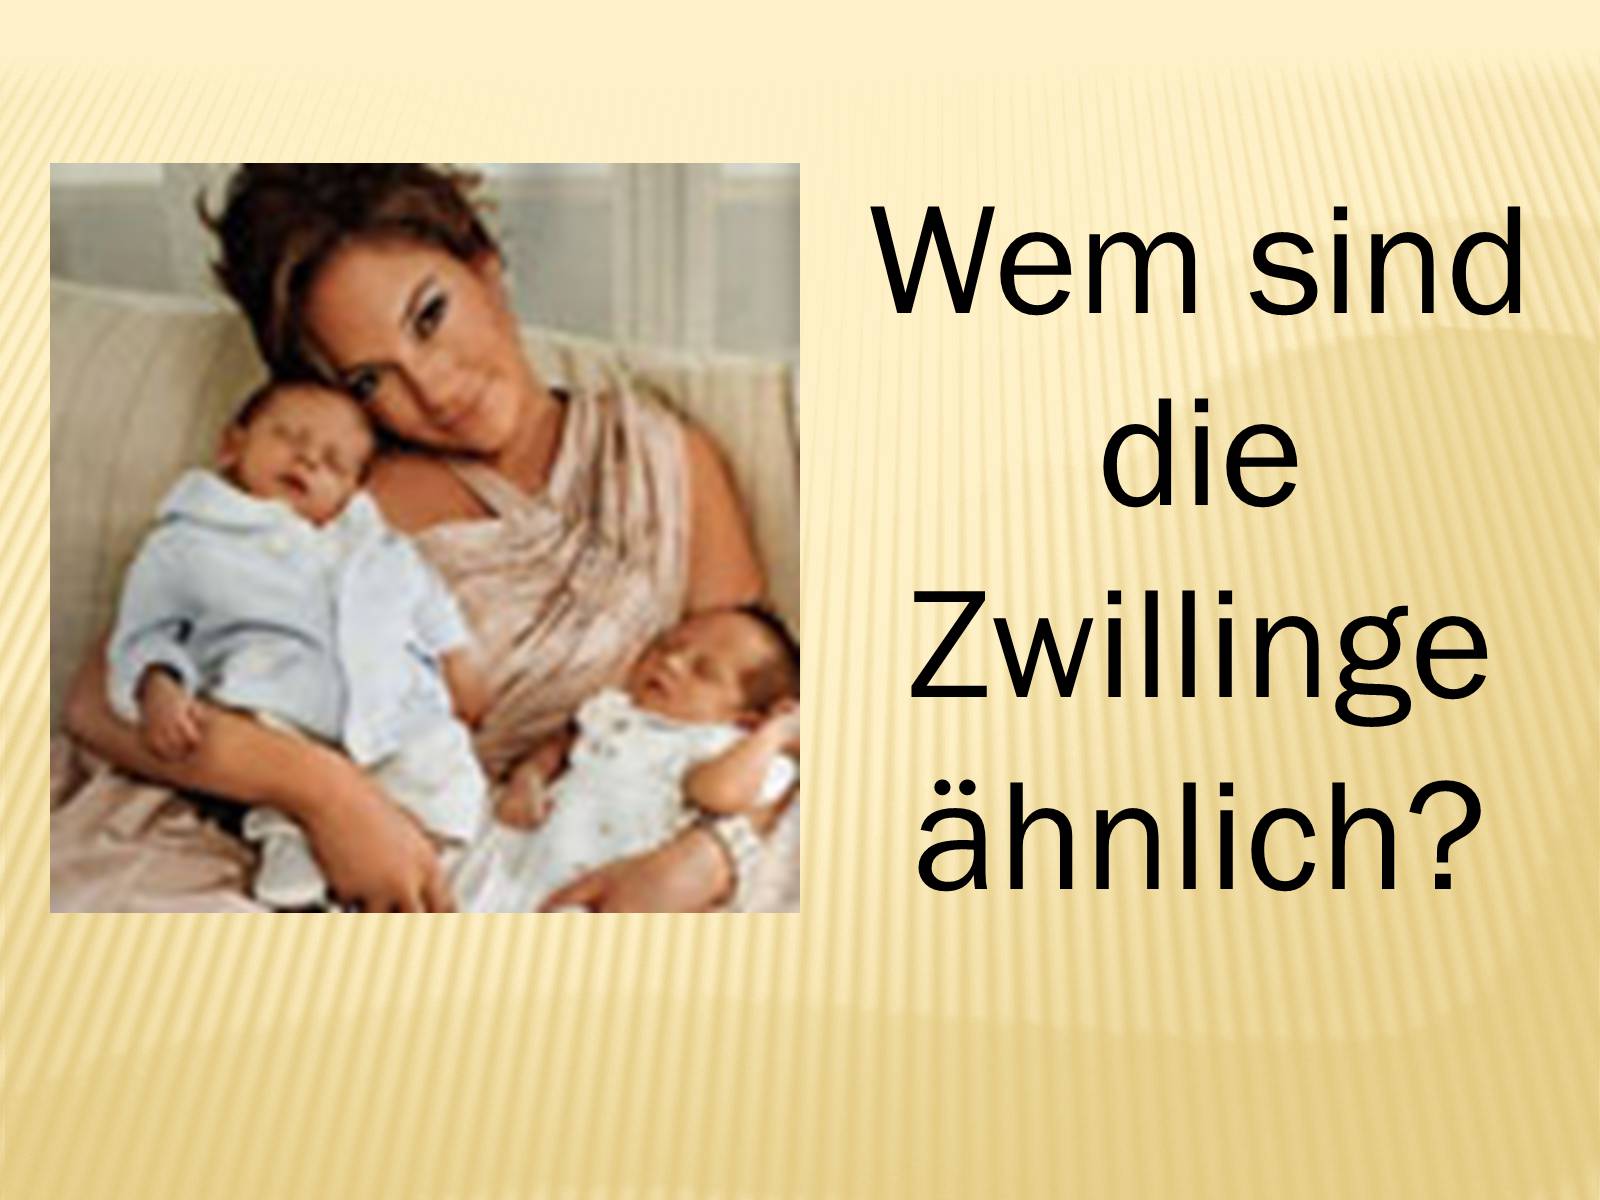 Презентація на тему «Wem ist der Sohn ahnlich?» - Слайд #2